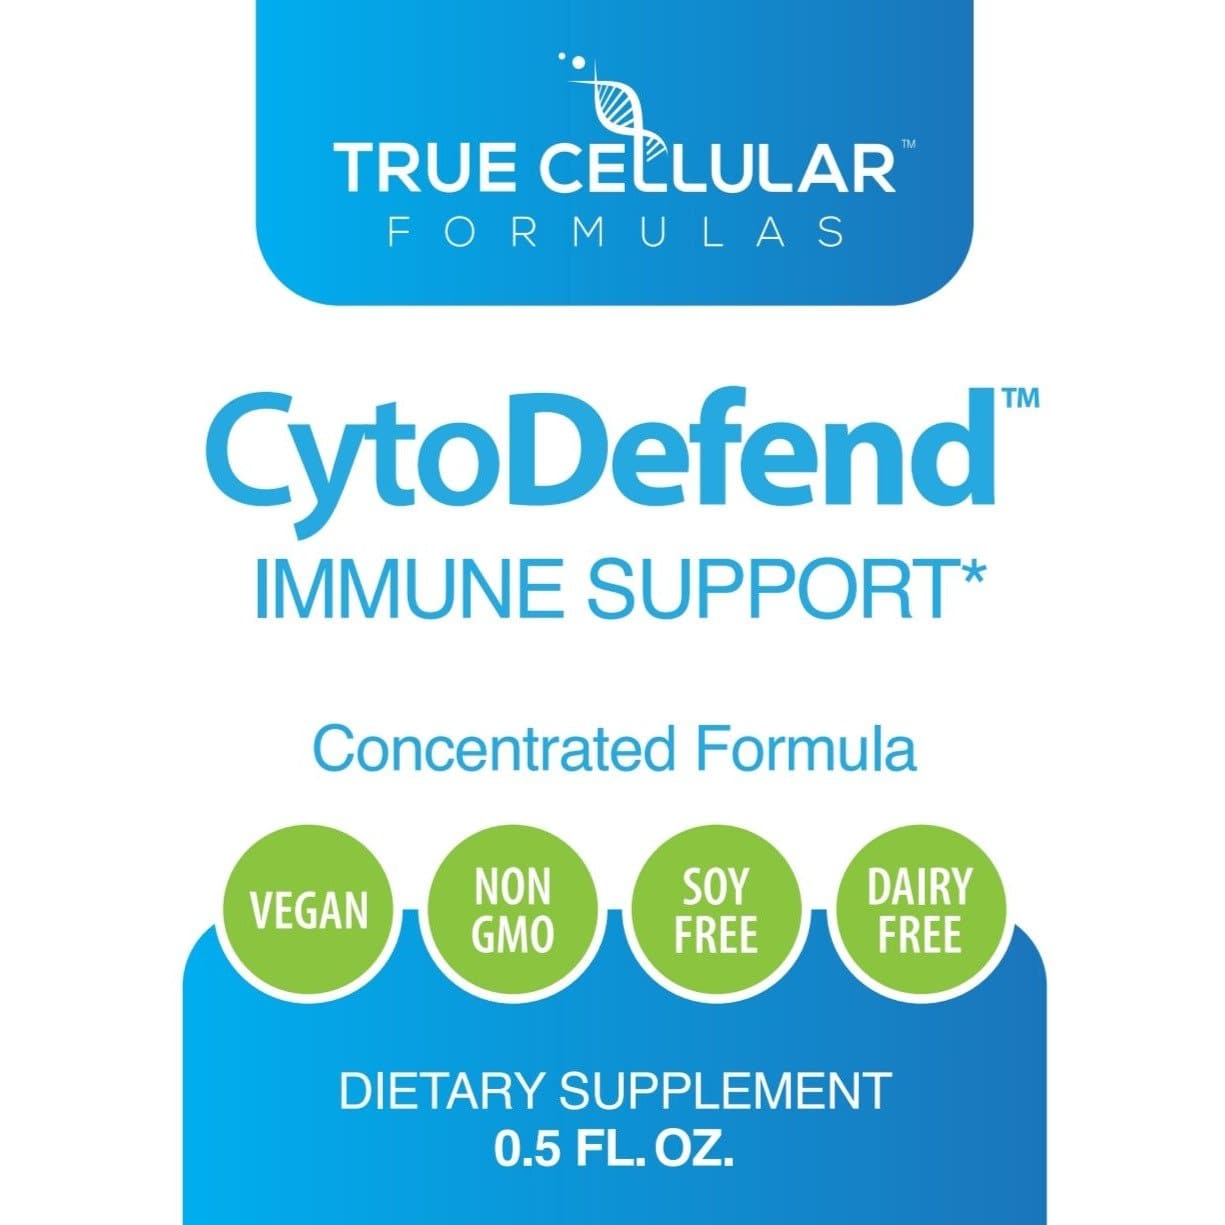 CytoDefend - Immune Support* - 0.5 oz - 3 PACK OFFER